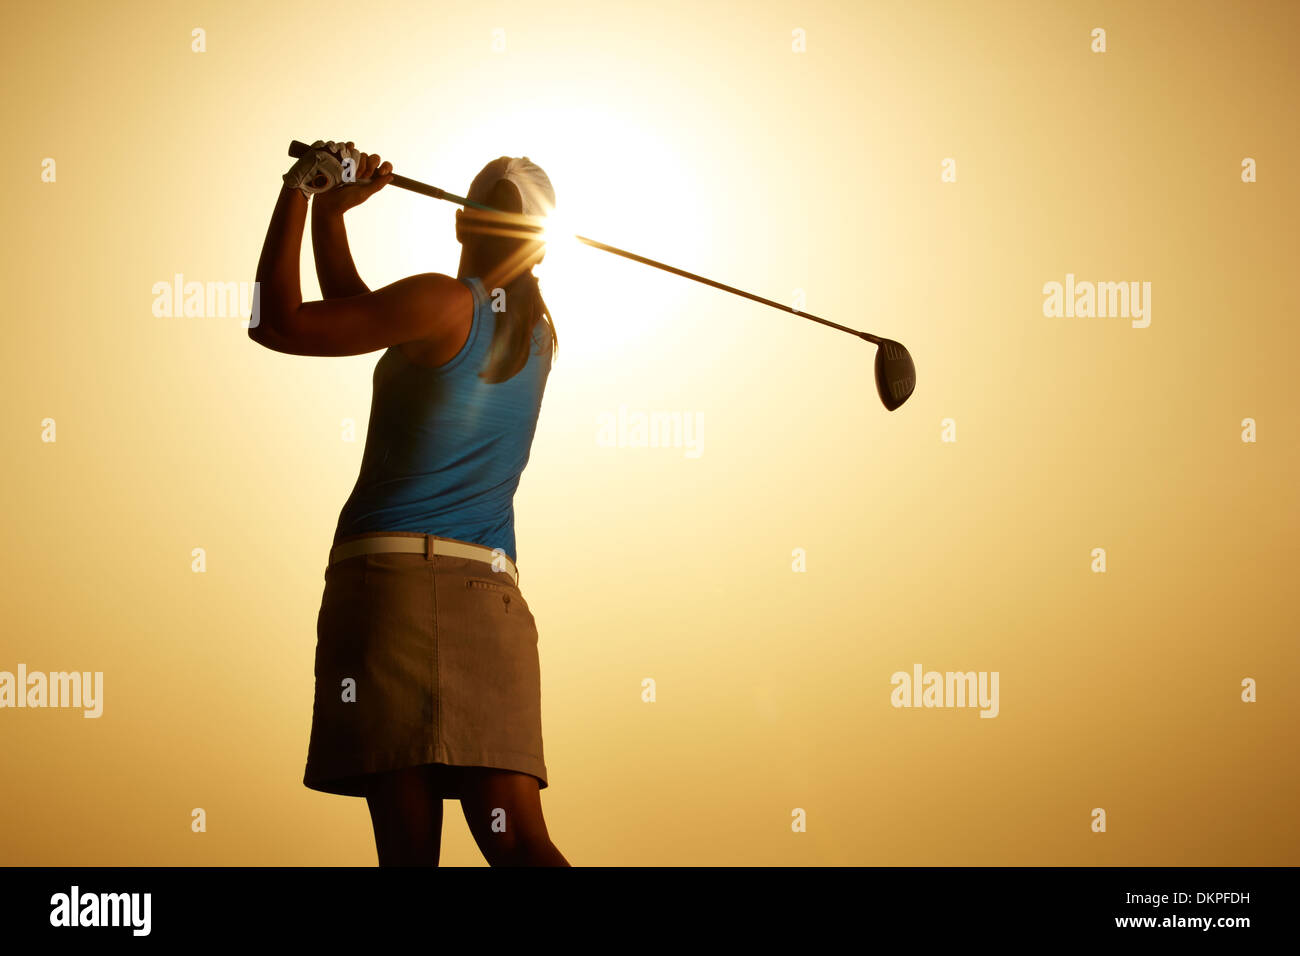 Sun shining behind woman swinging golf club Stock Photo